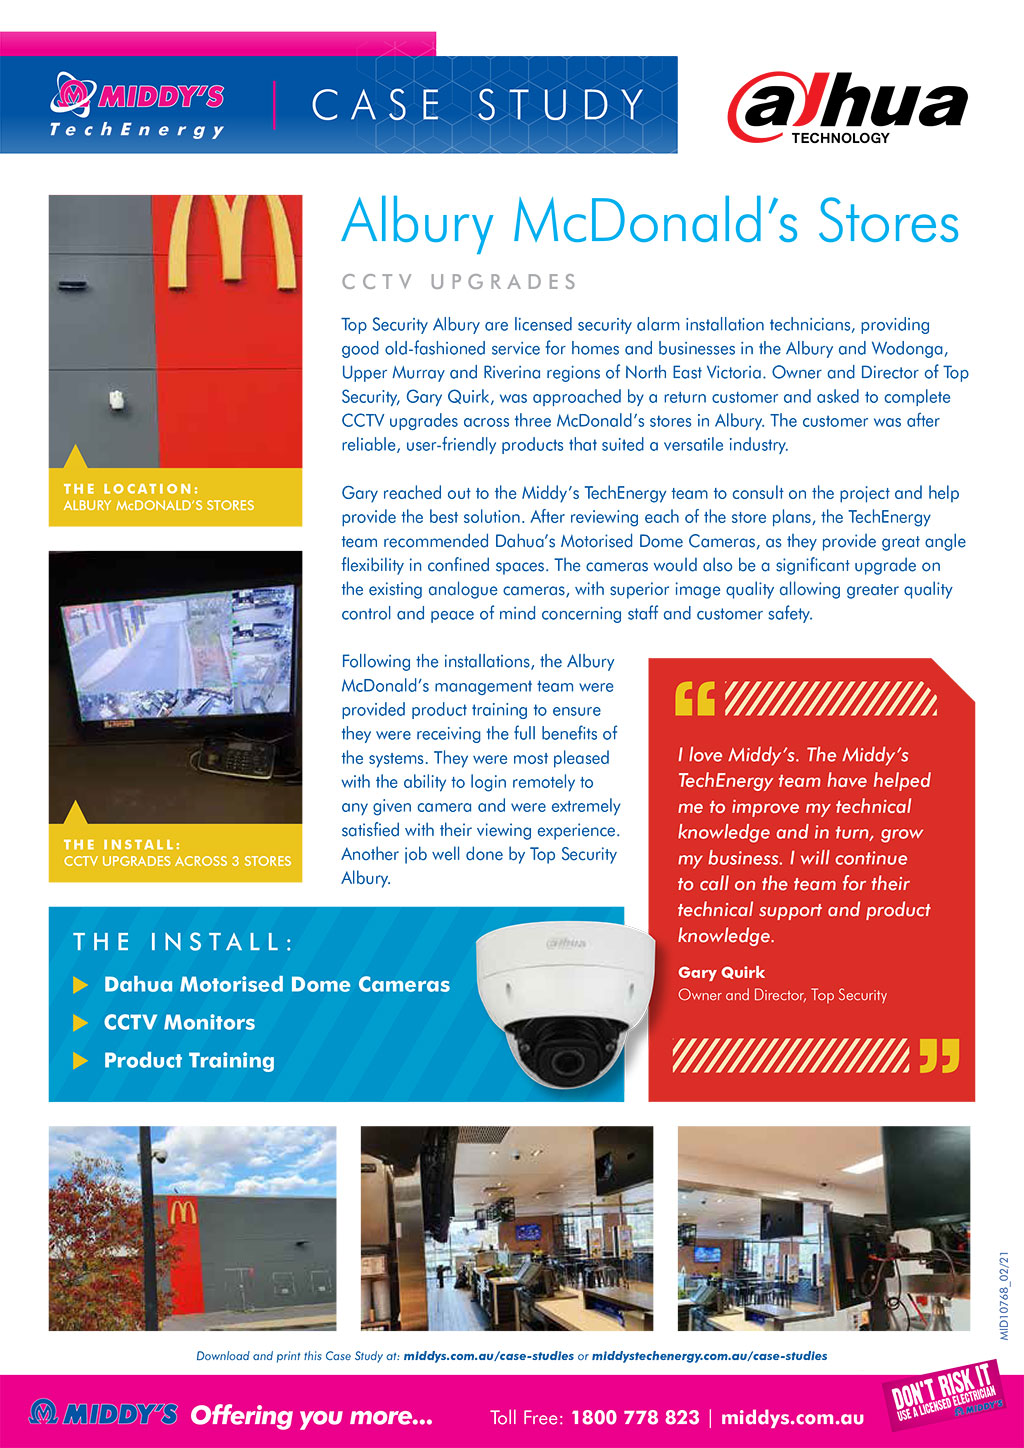 Albury McDonald’s Stores CCTV Upgrades Case Study